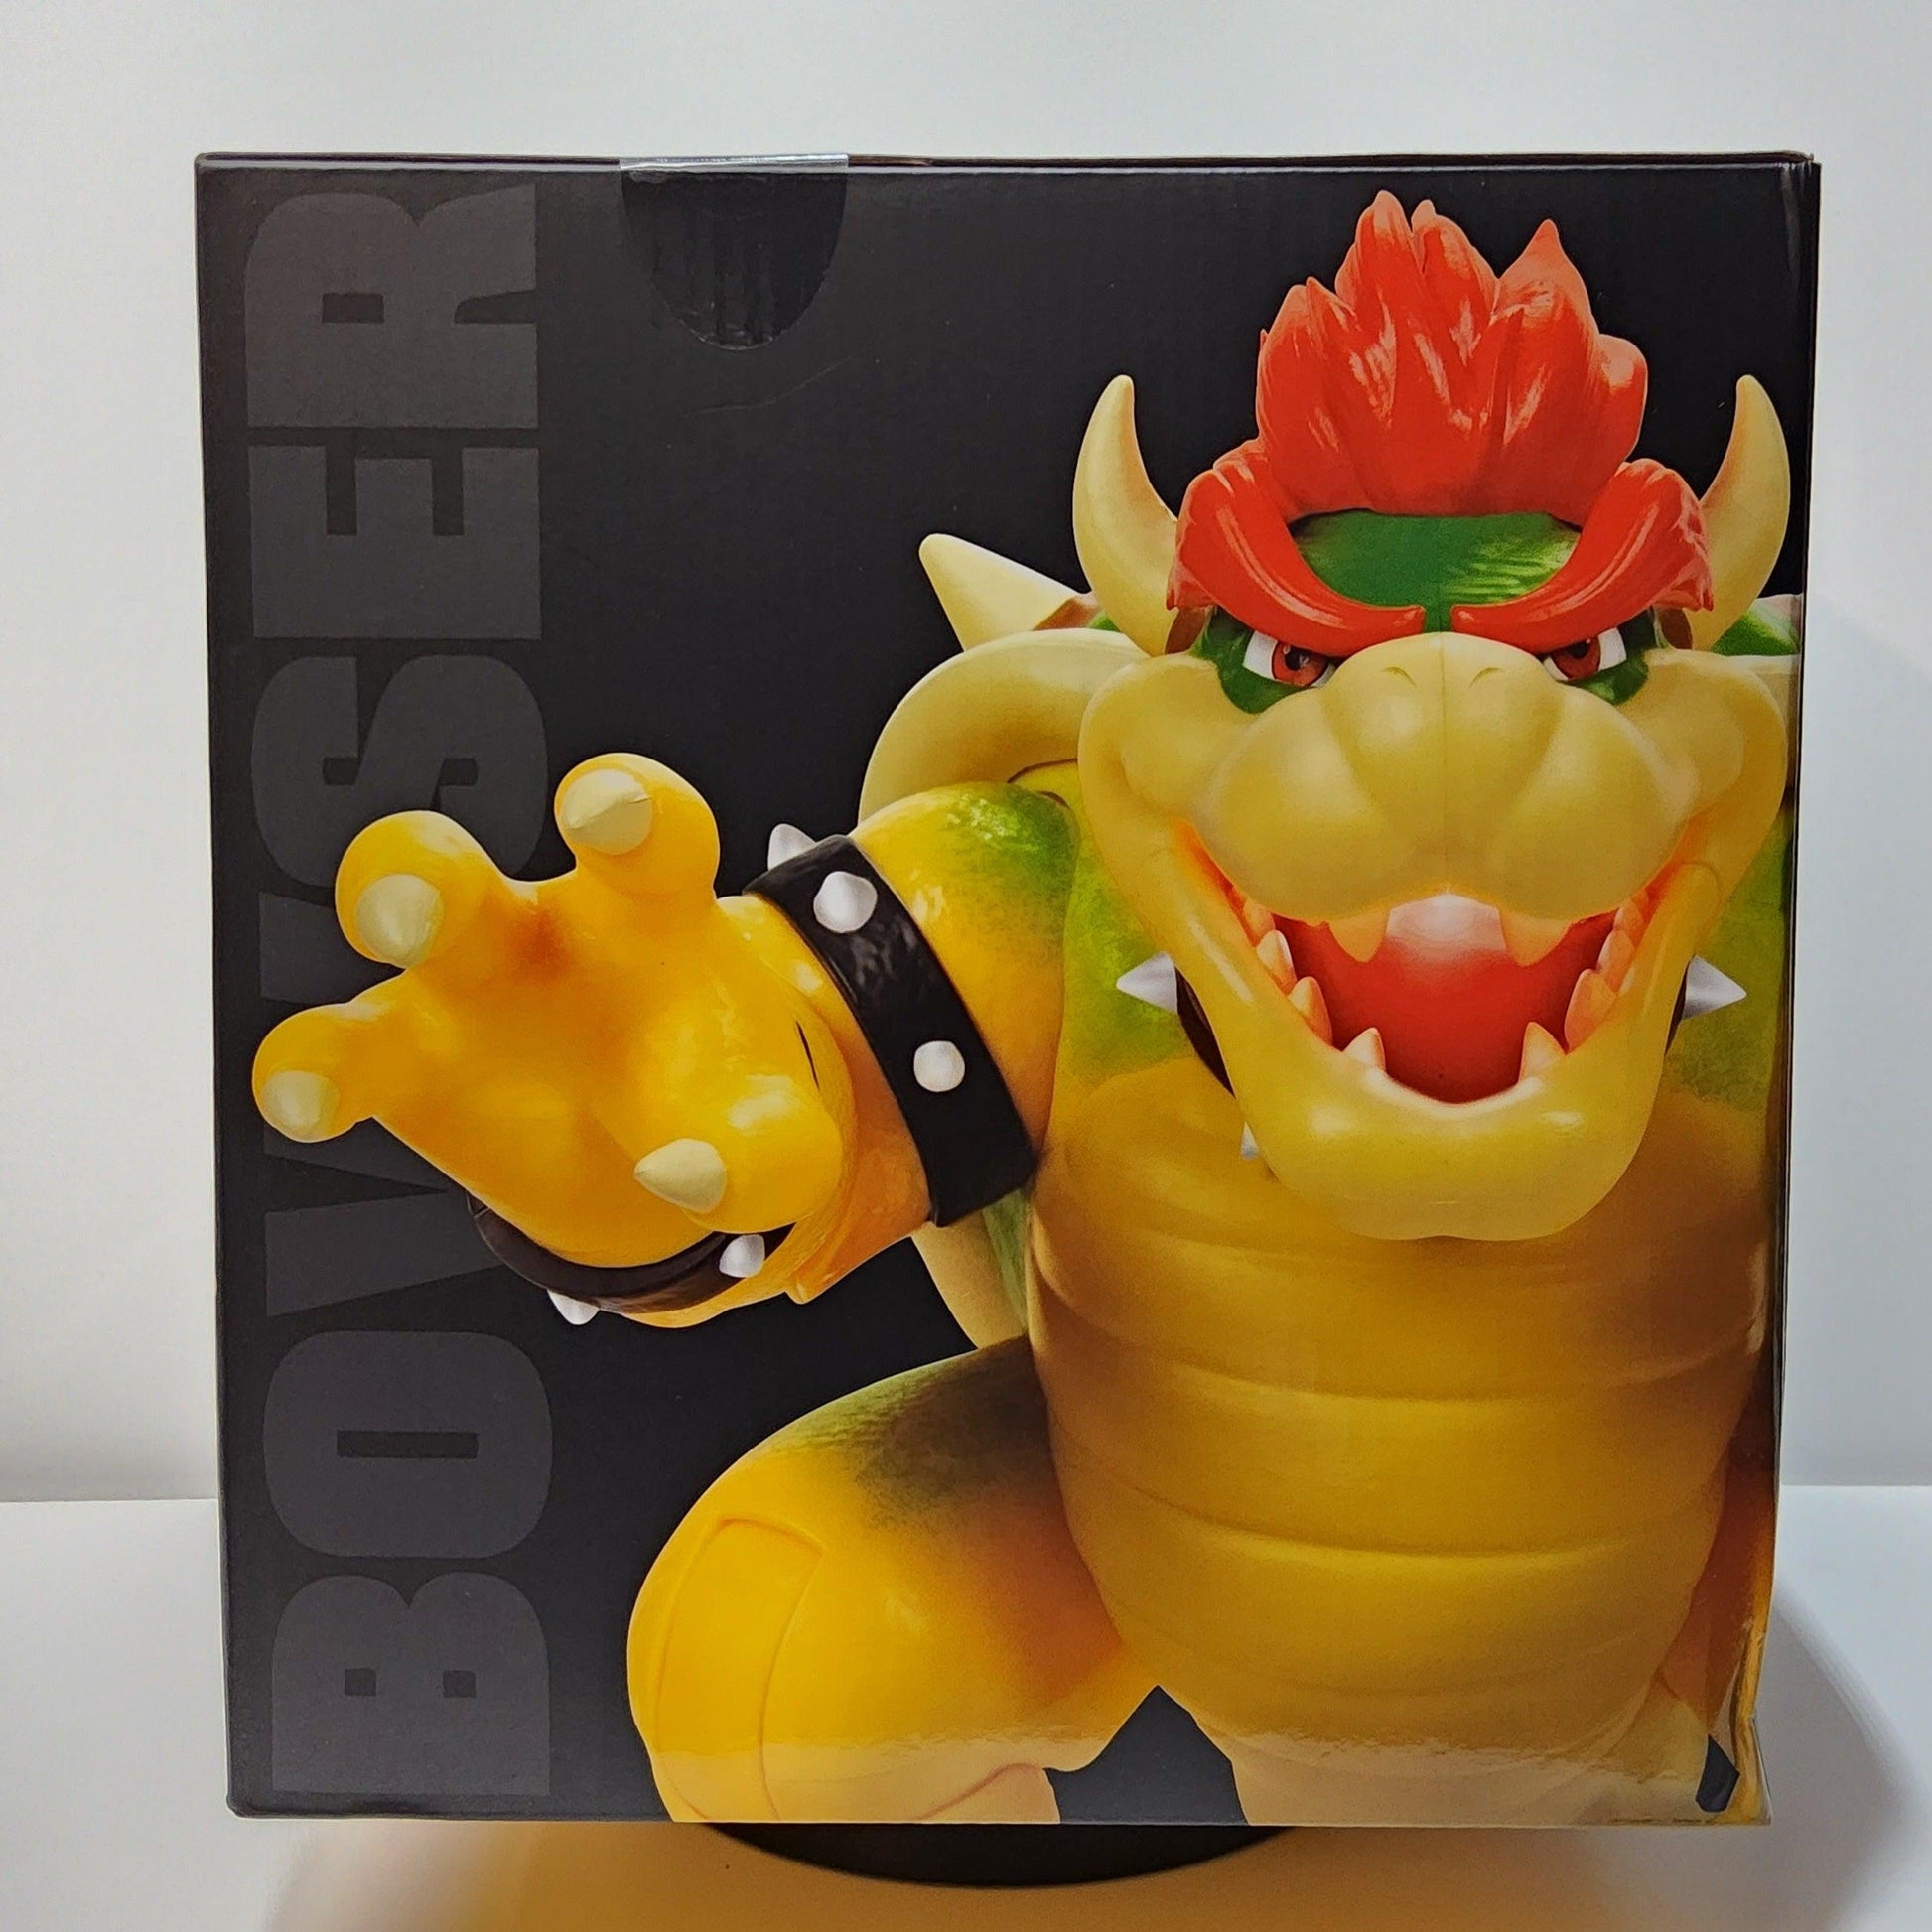 The Super Mario Bros. Movie 7 Deluxe Bowser Figure